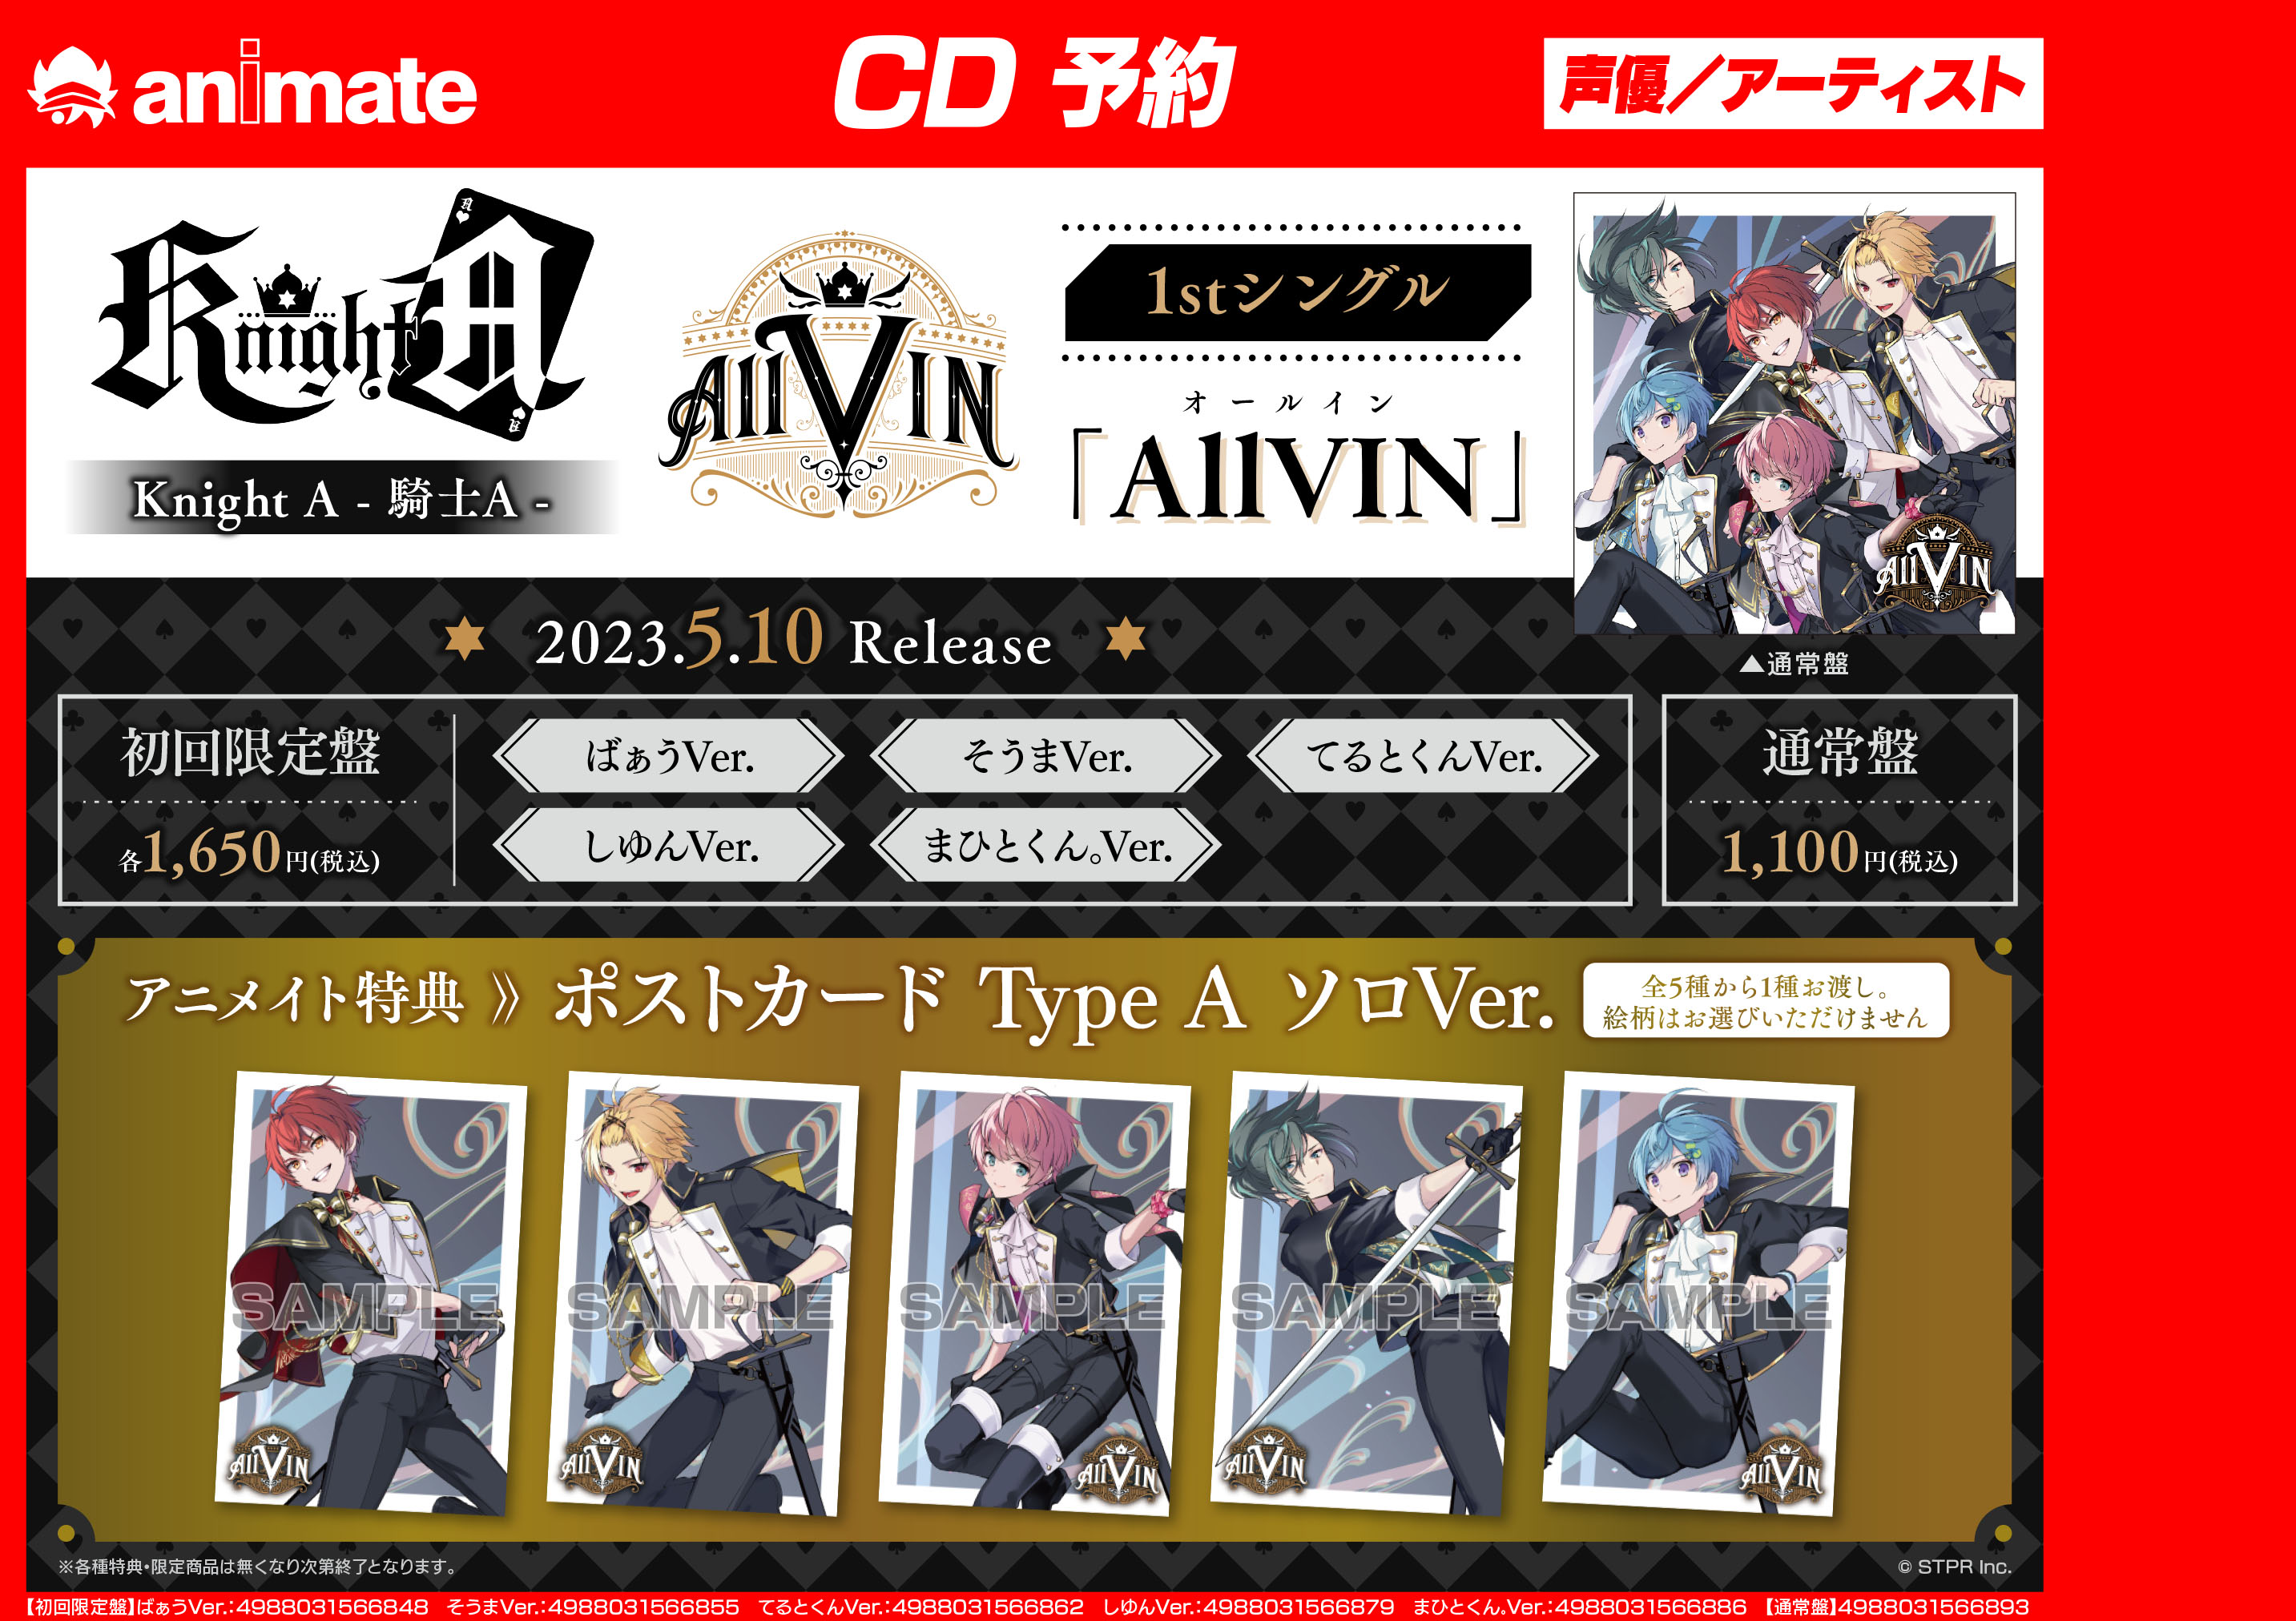 CD『Knight A - 騎士A - 1stシングル 「AllVIN」』予約受付中 ...